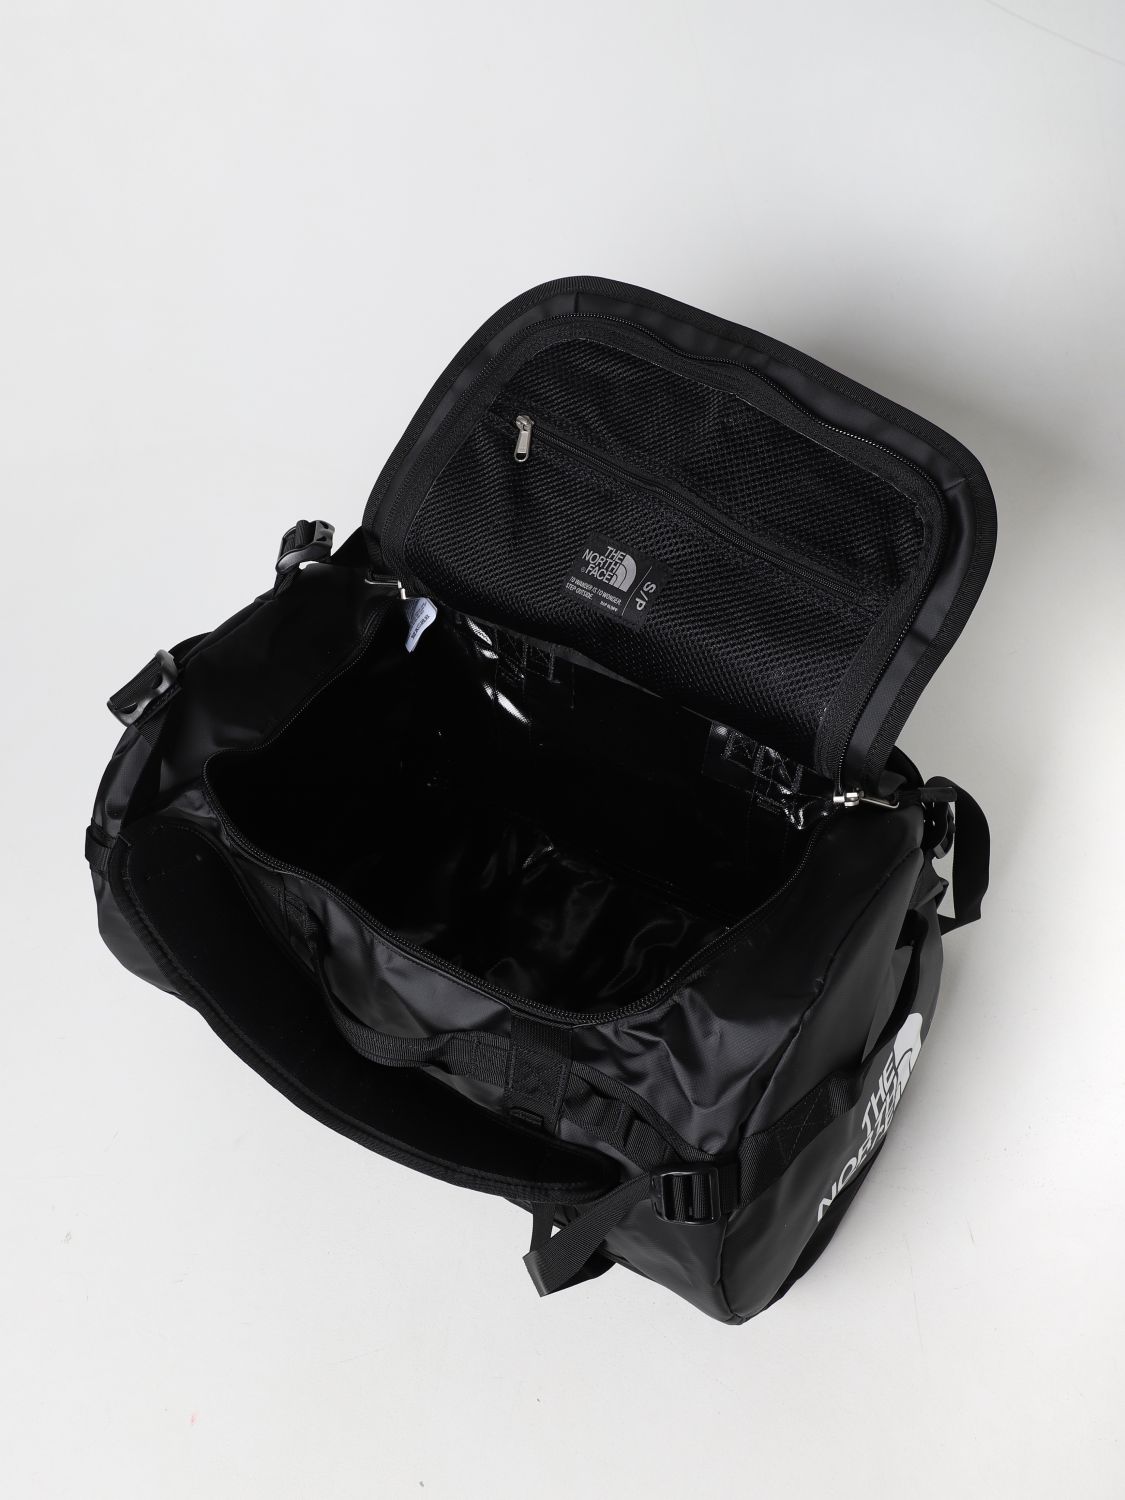 Niet doen Binnenwaarts herwinnen THE NORTH FACE: travel bag for man - Black | The North Face travel bag  NF0A52ST online on GIGLIO.COM